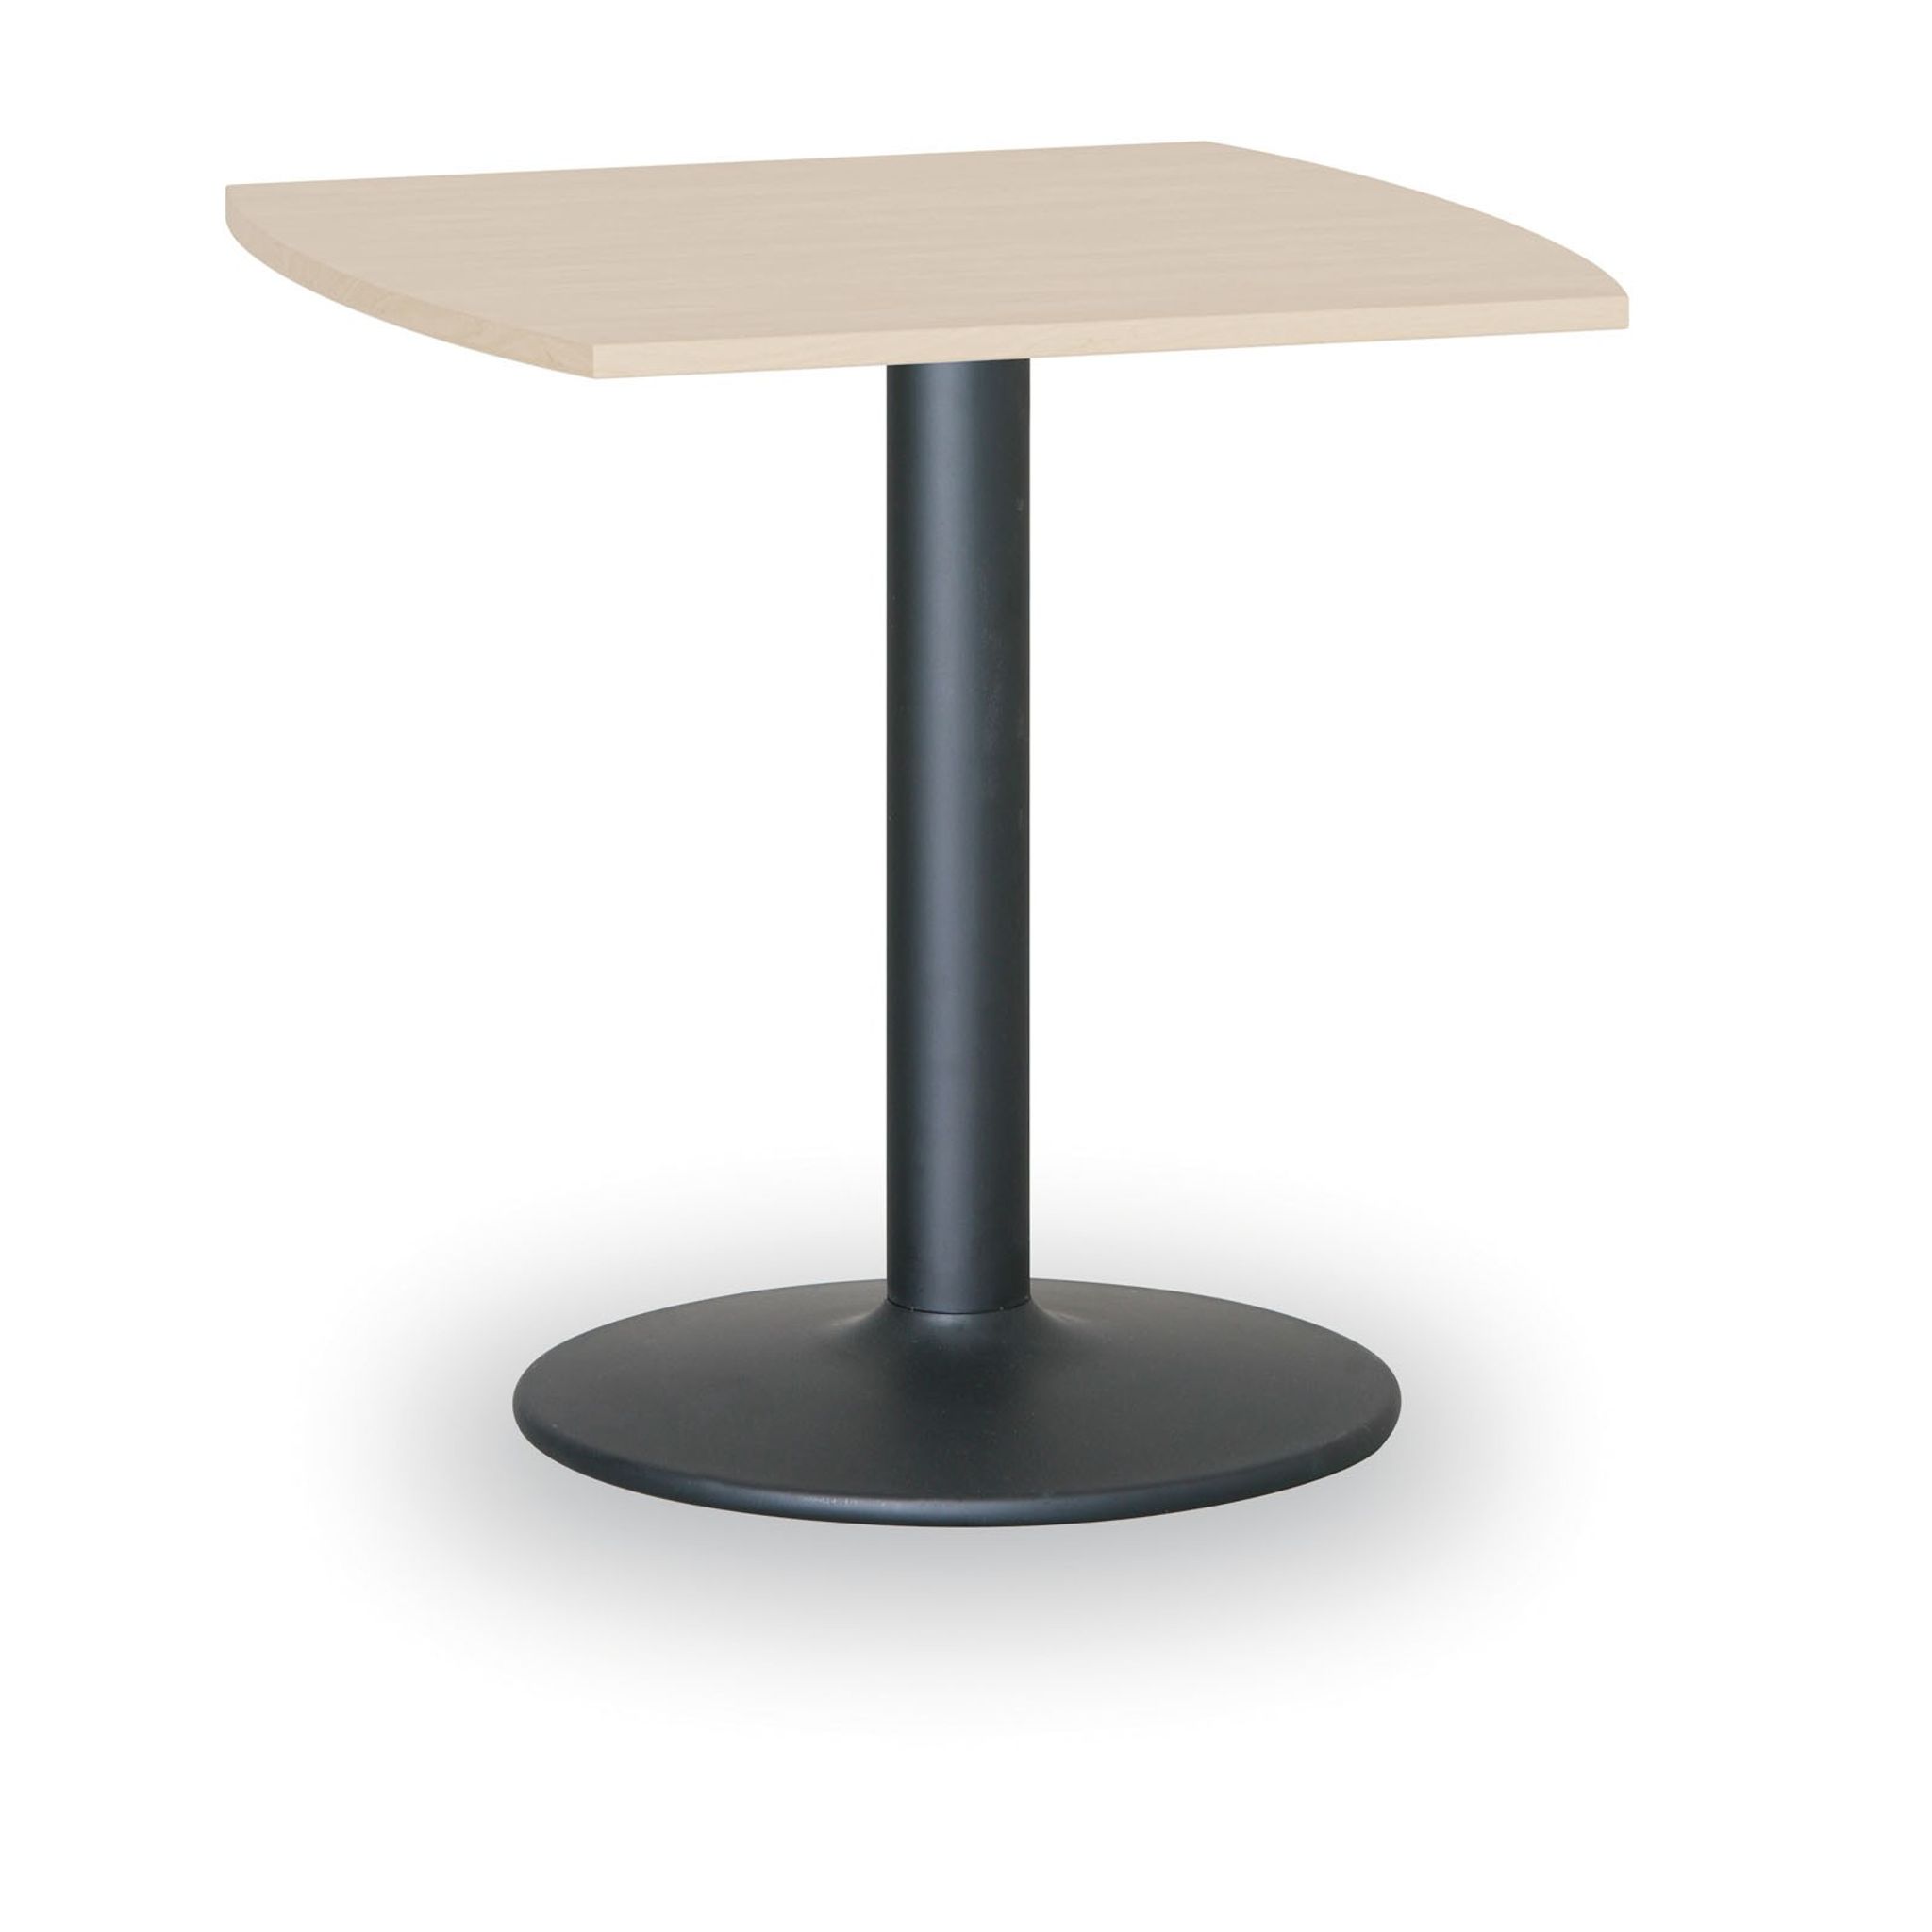 Konferenčný stolík ZEUS II, 660x660 mm, čierna podnož, doska breza